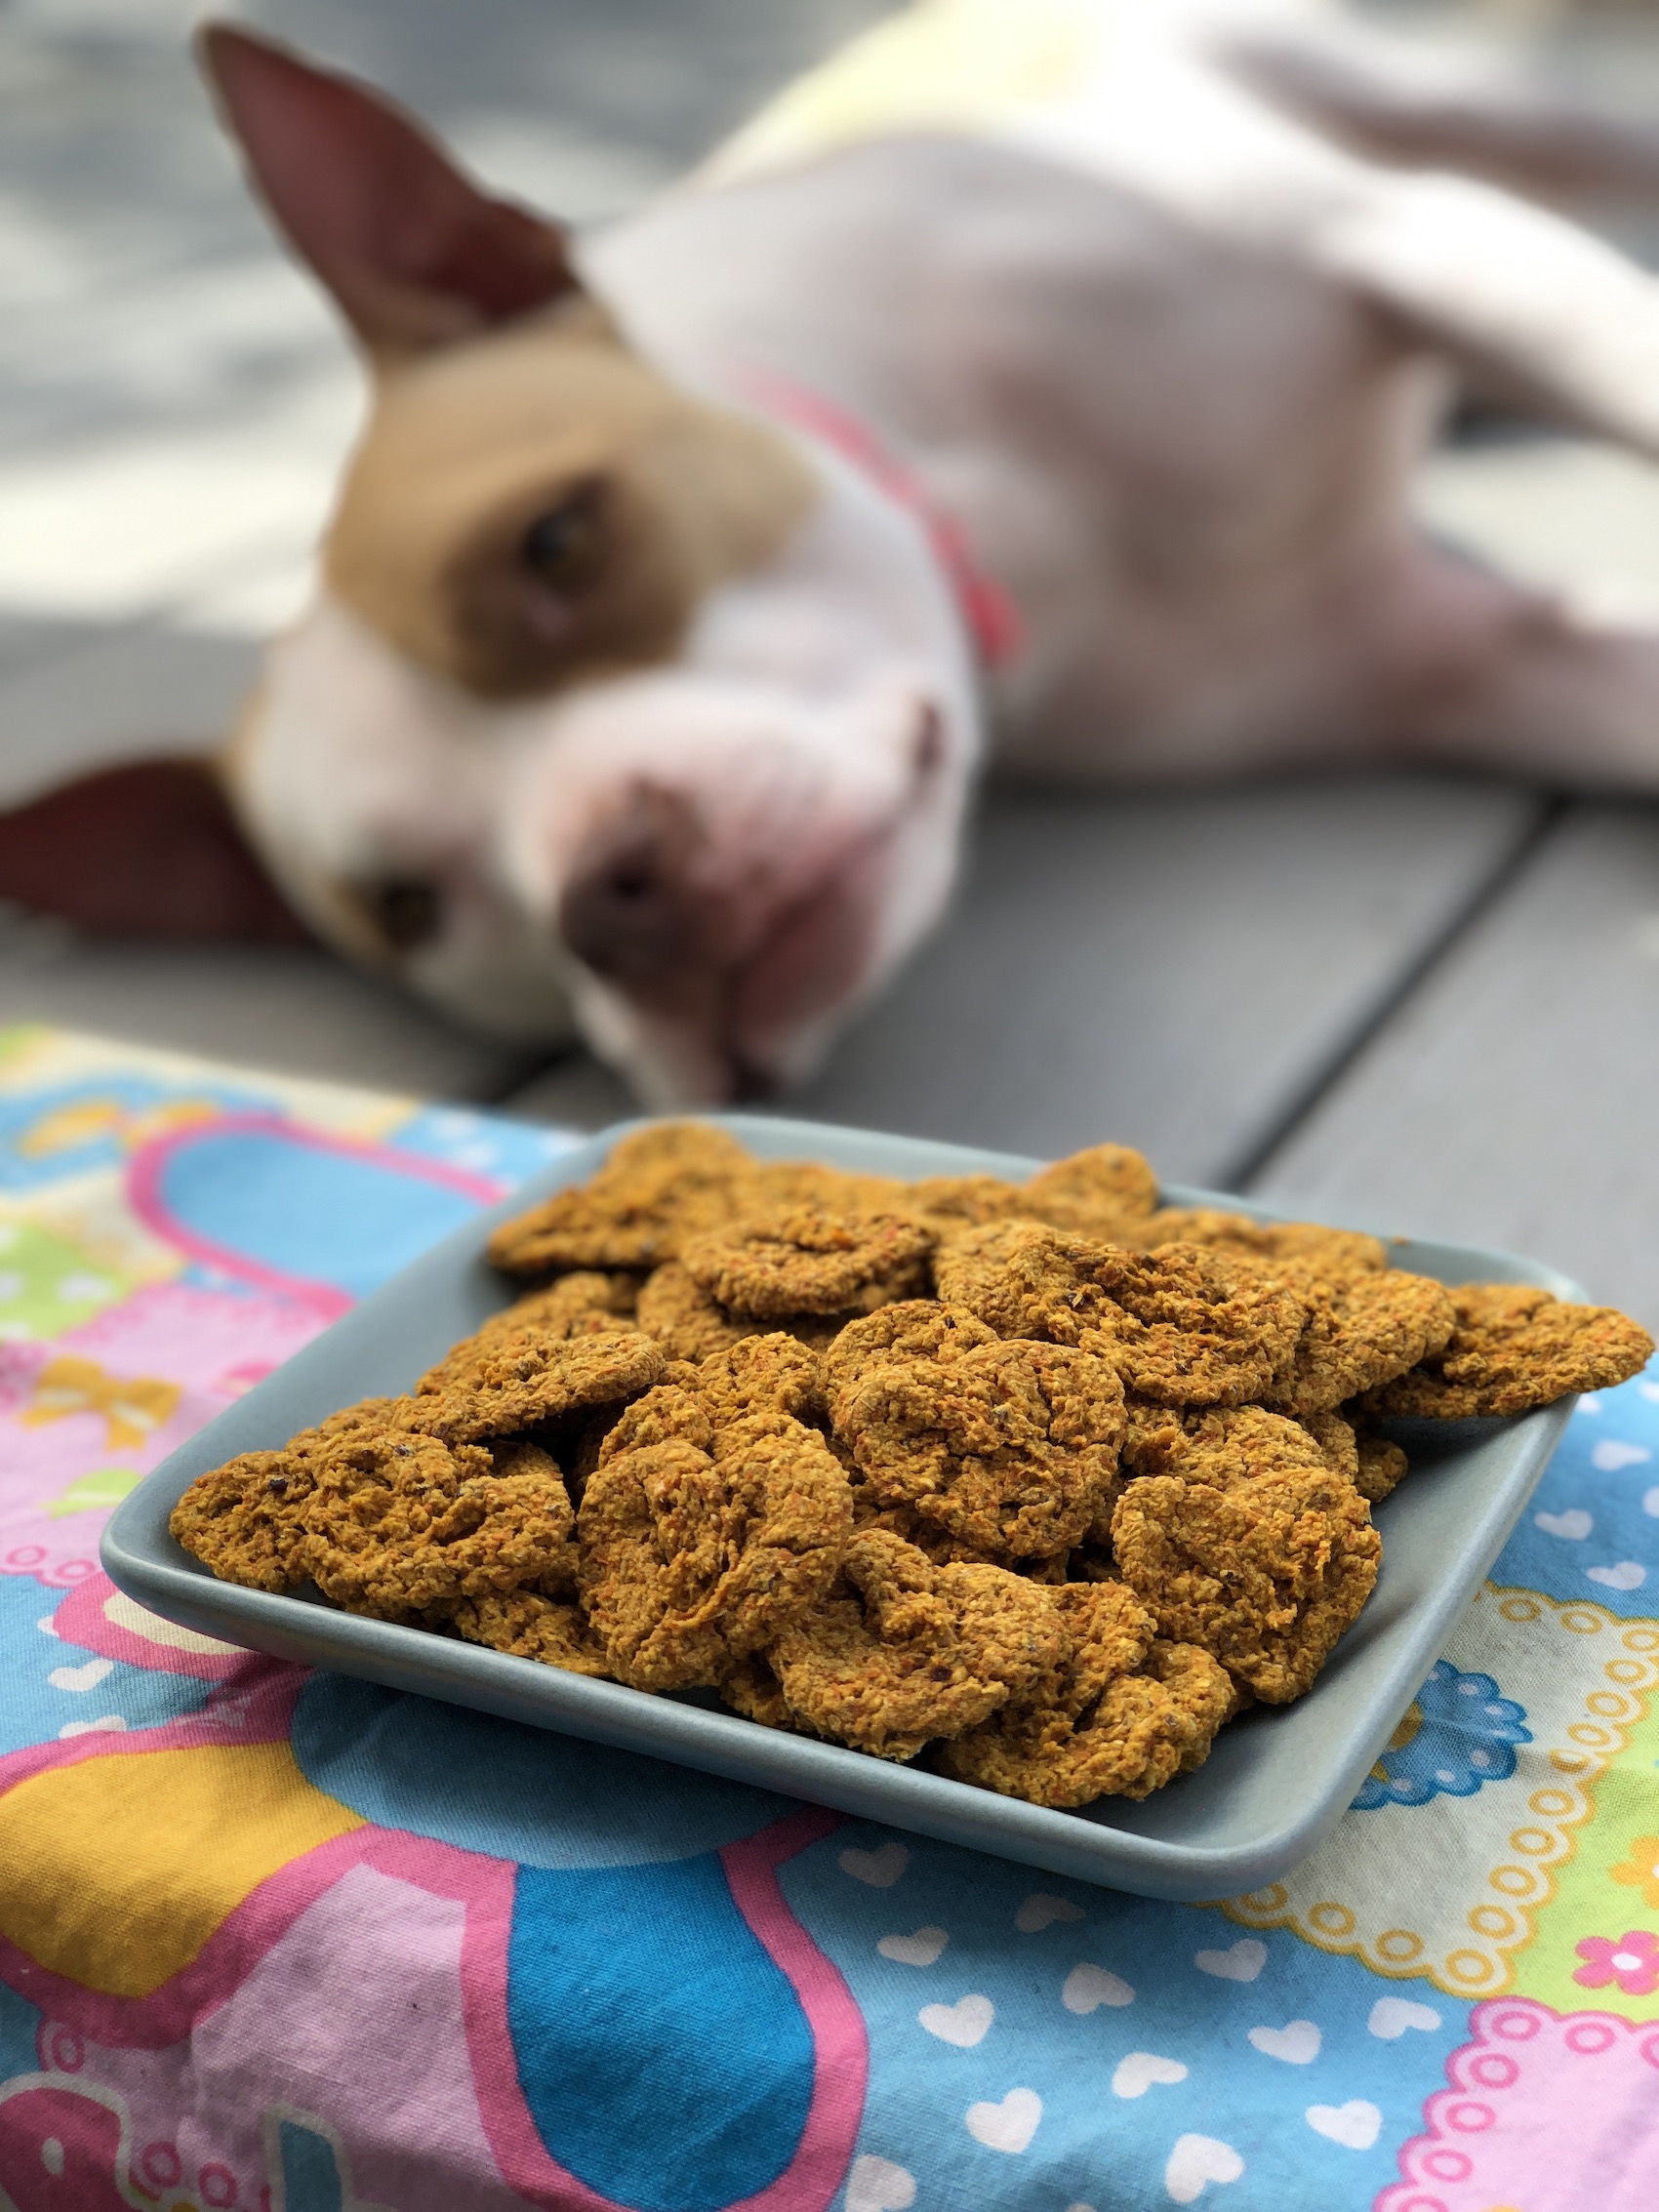 Macchiato with her vegan dog treats